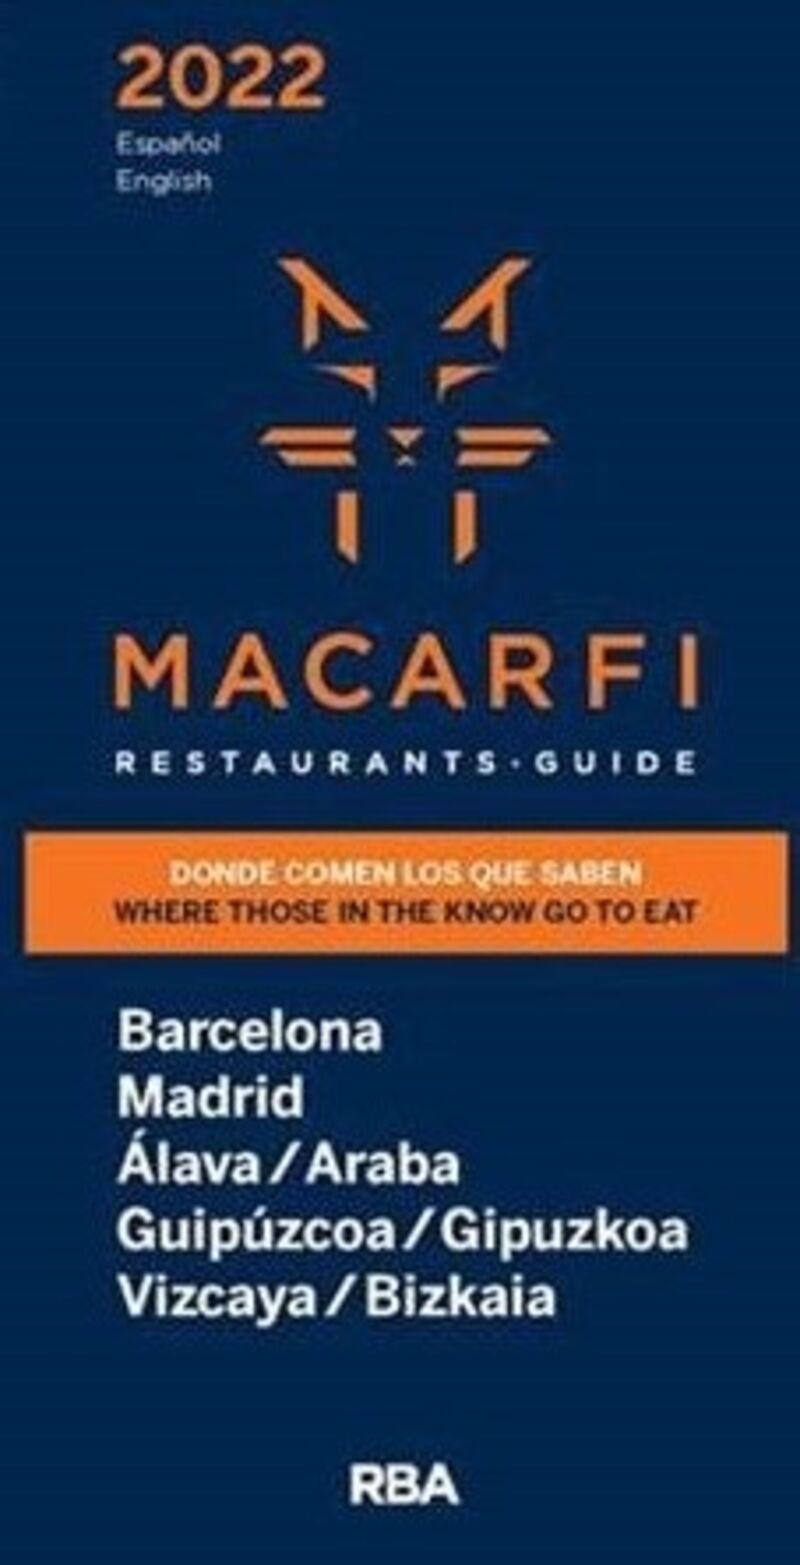 2022 guia macarfi de restaurantes barcelona, madrid, alava, gipuzcoa, vizcaya - Aa. Vv.